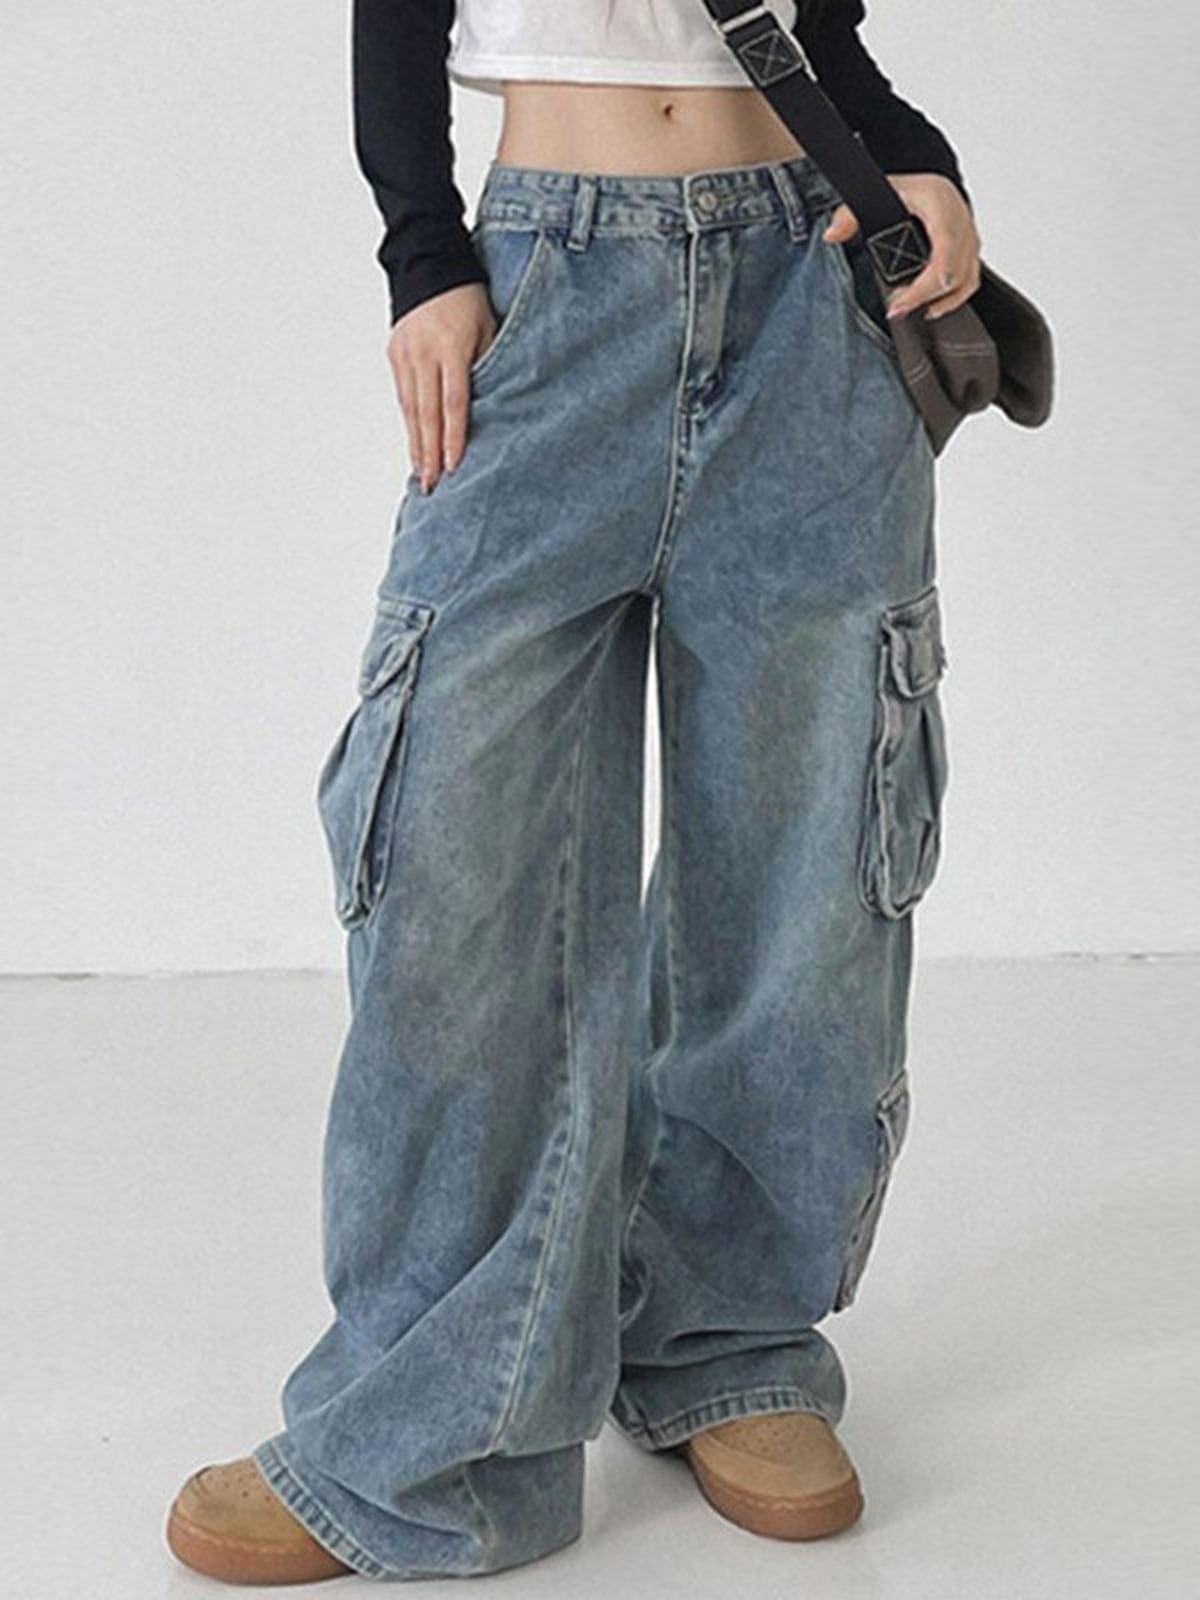 J Lo Wears Baggy Denim Cargo Pants With Oversize Pockets | POPSUGAR Fashion